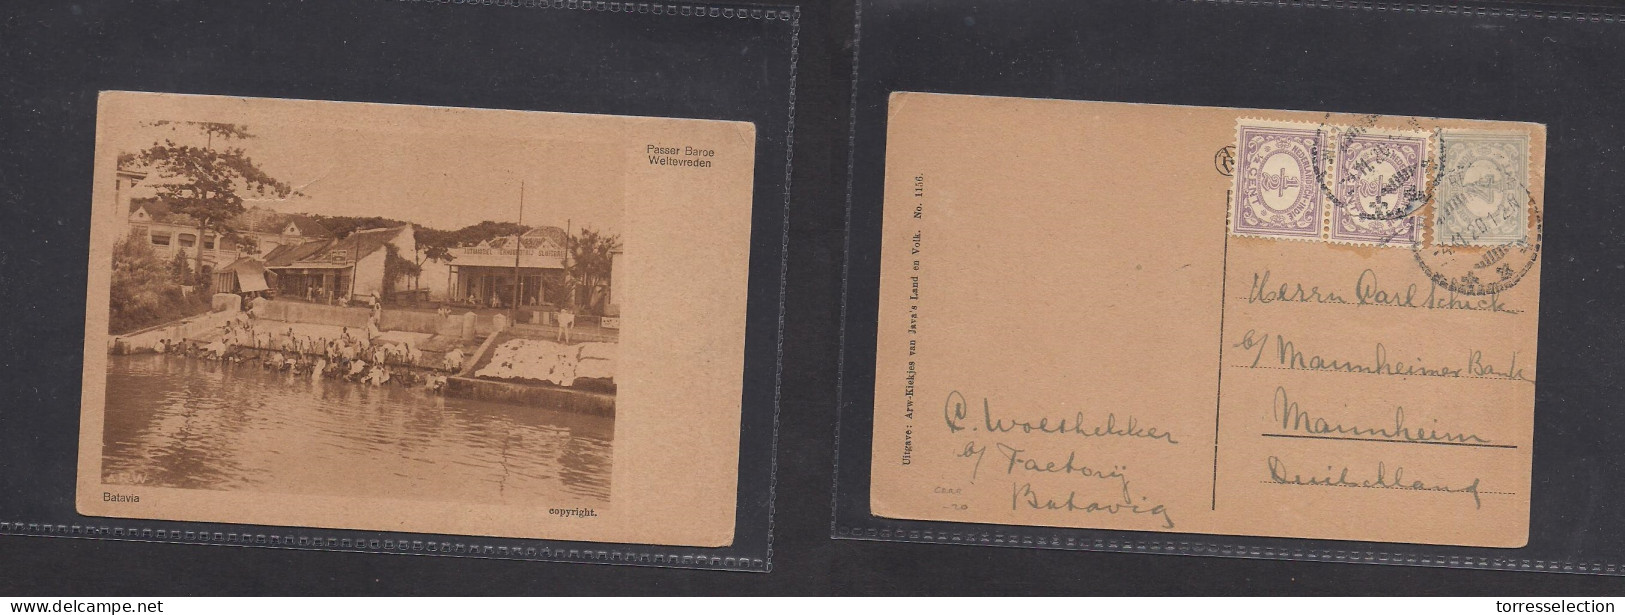 DUTCH INDIES. 1920 (4 Nov) Batavia - Germany, Mannheim. Multifkd Ppc. Interesting Photo Card. XSALE. - Netherlands Indies